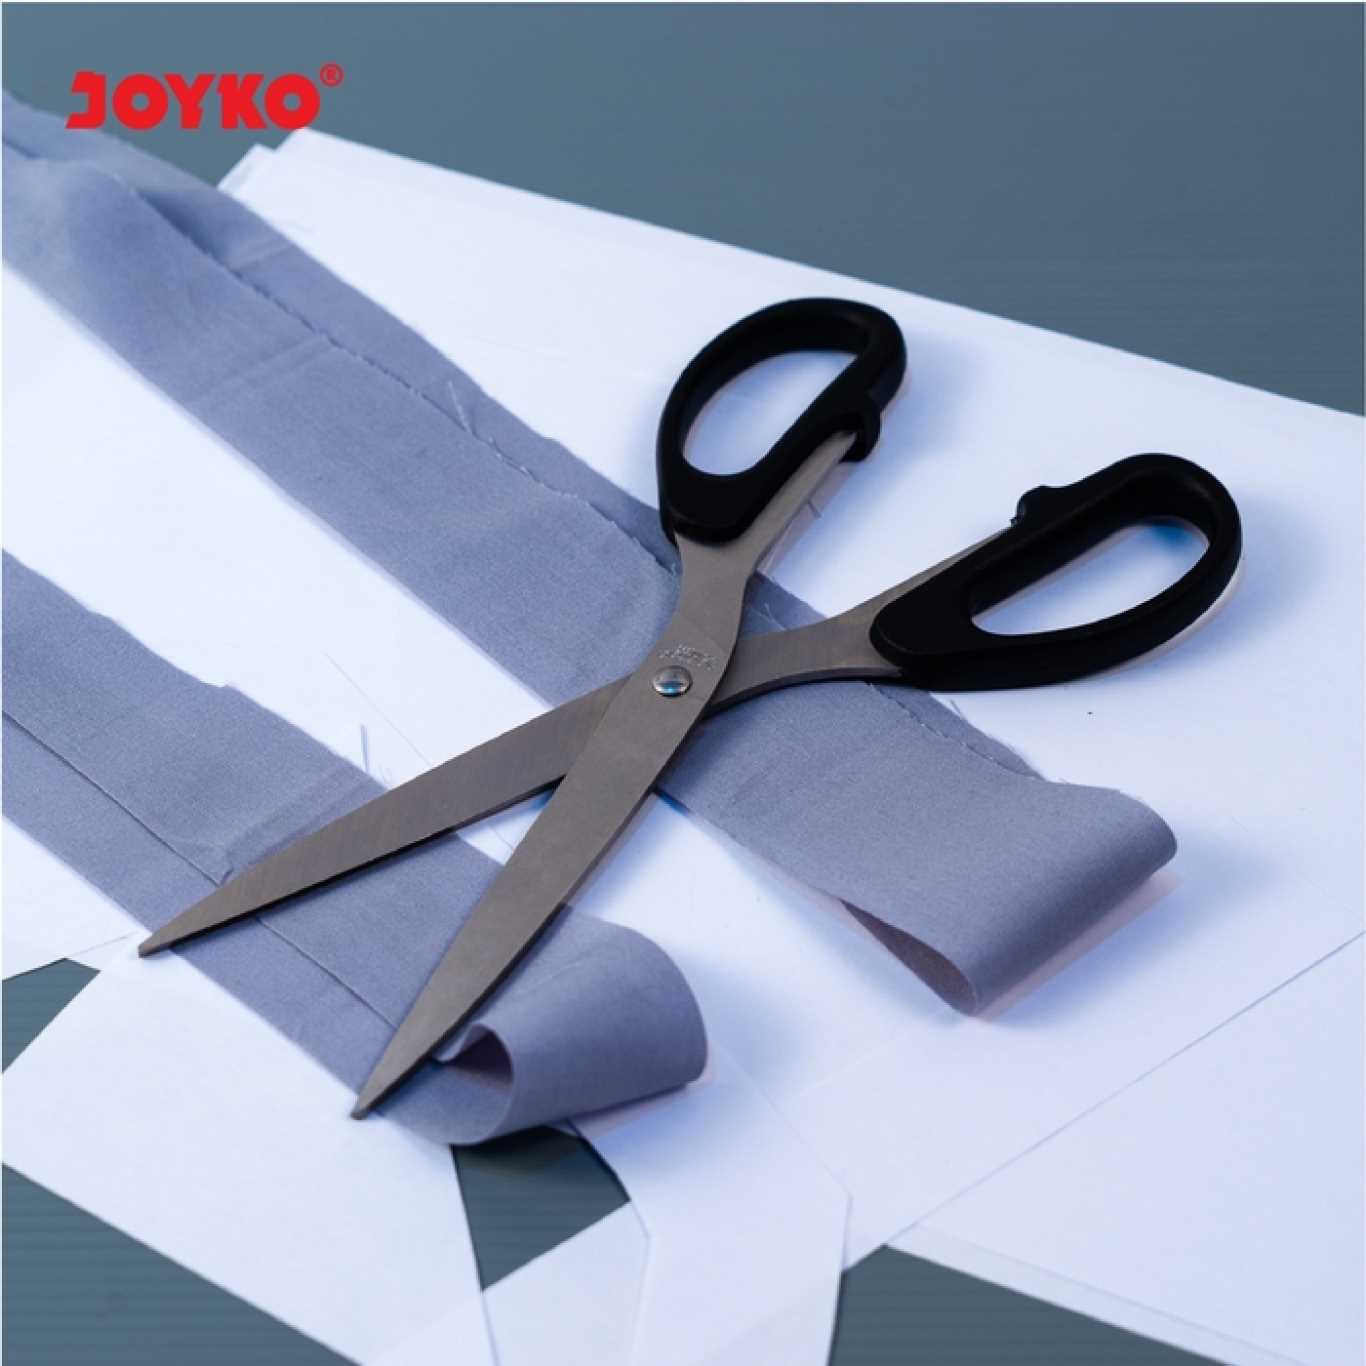 Gunting Pemotong Joyko Scissor Stainless Handle Plastik / SC-828 / SC-838 / SC-848  